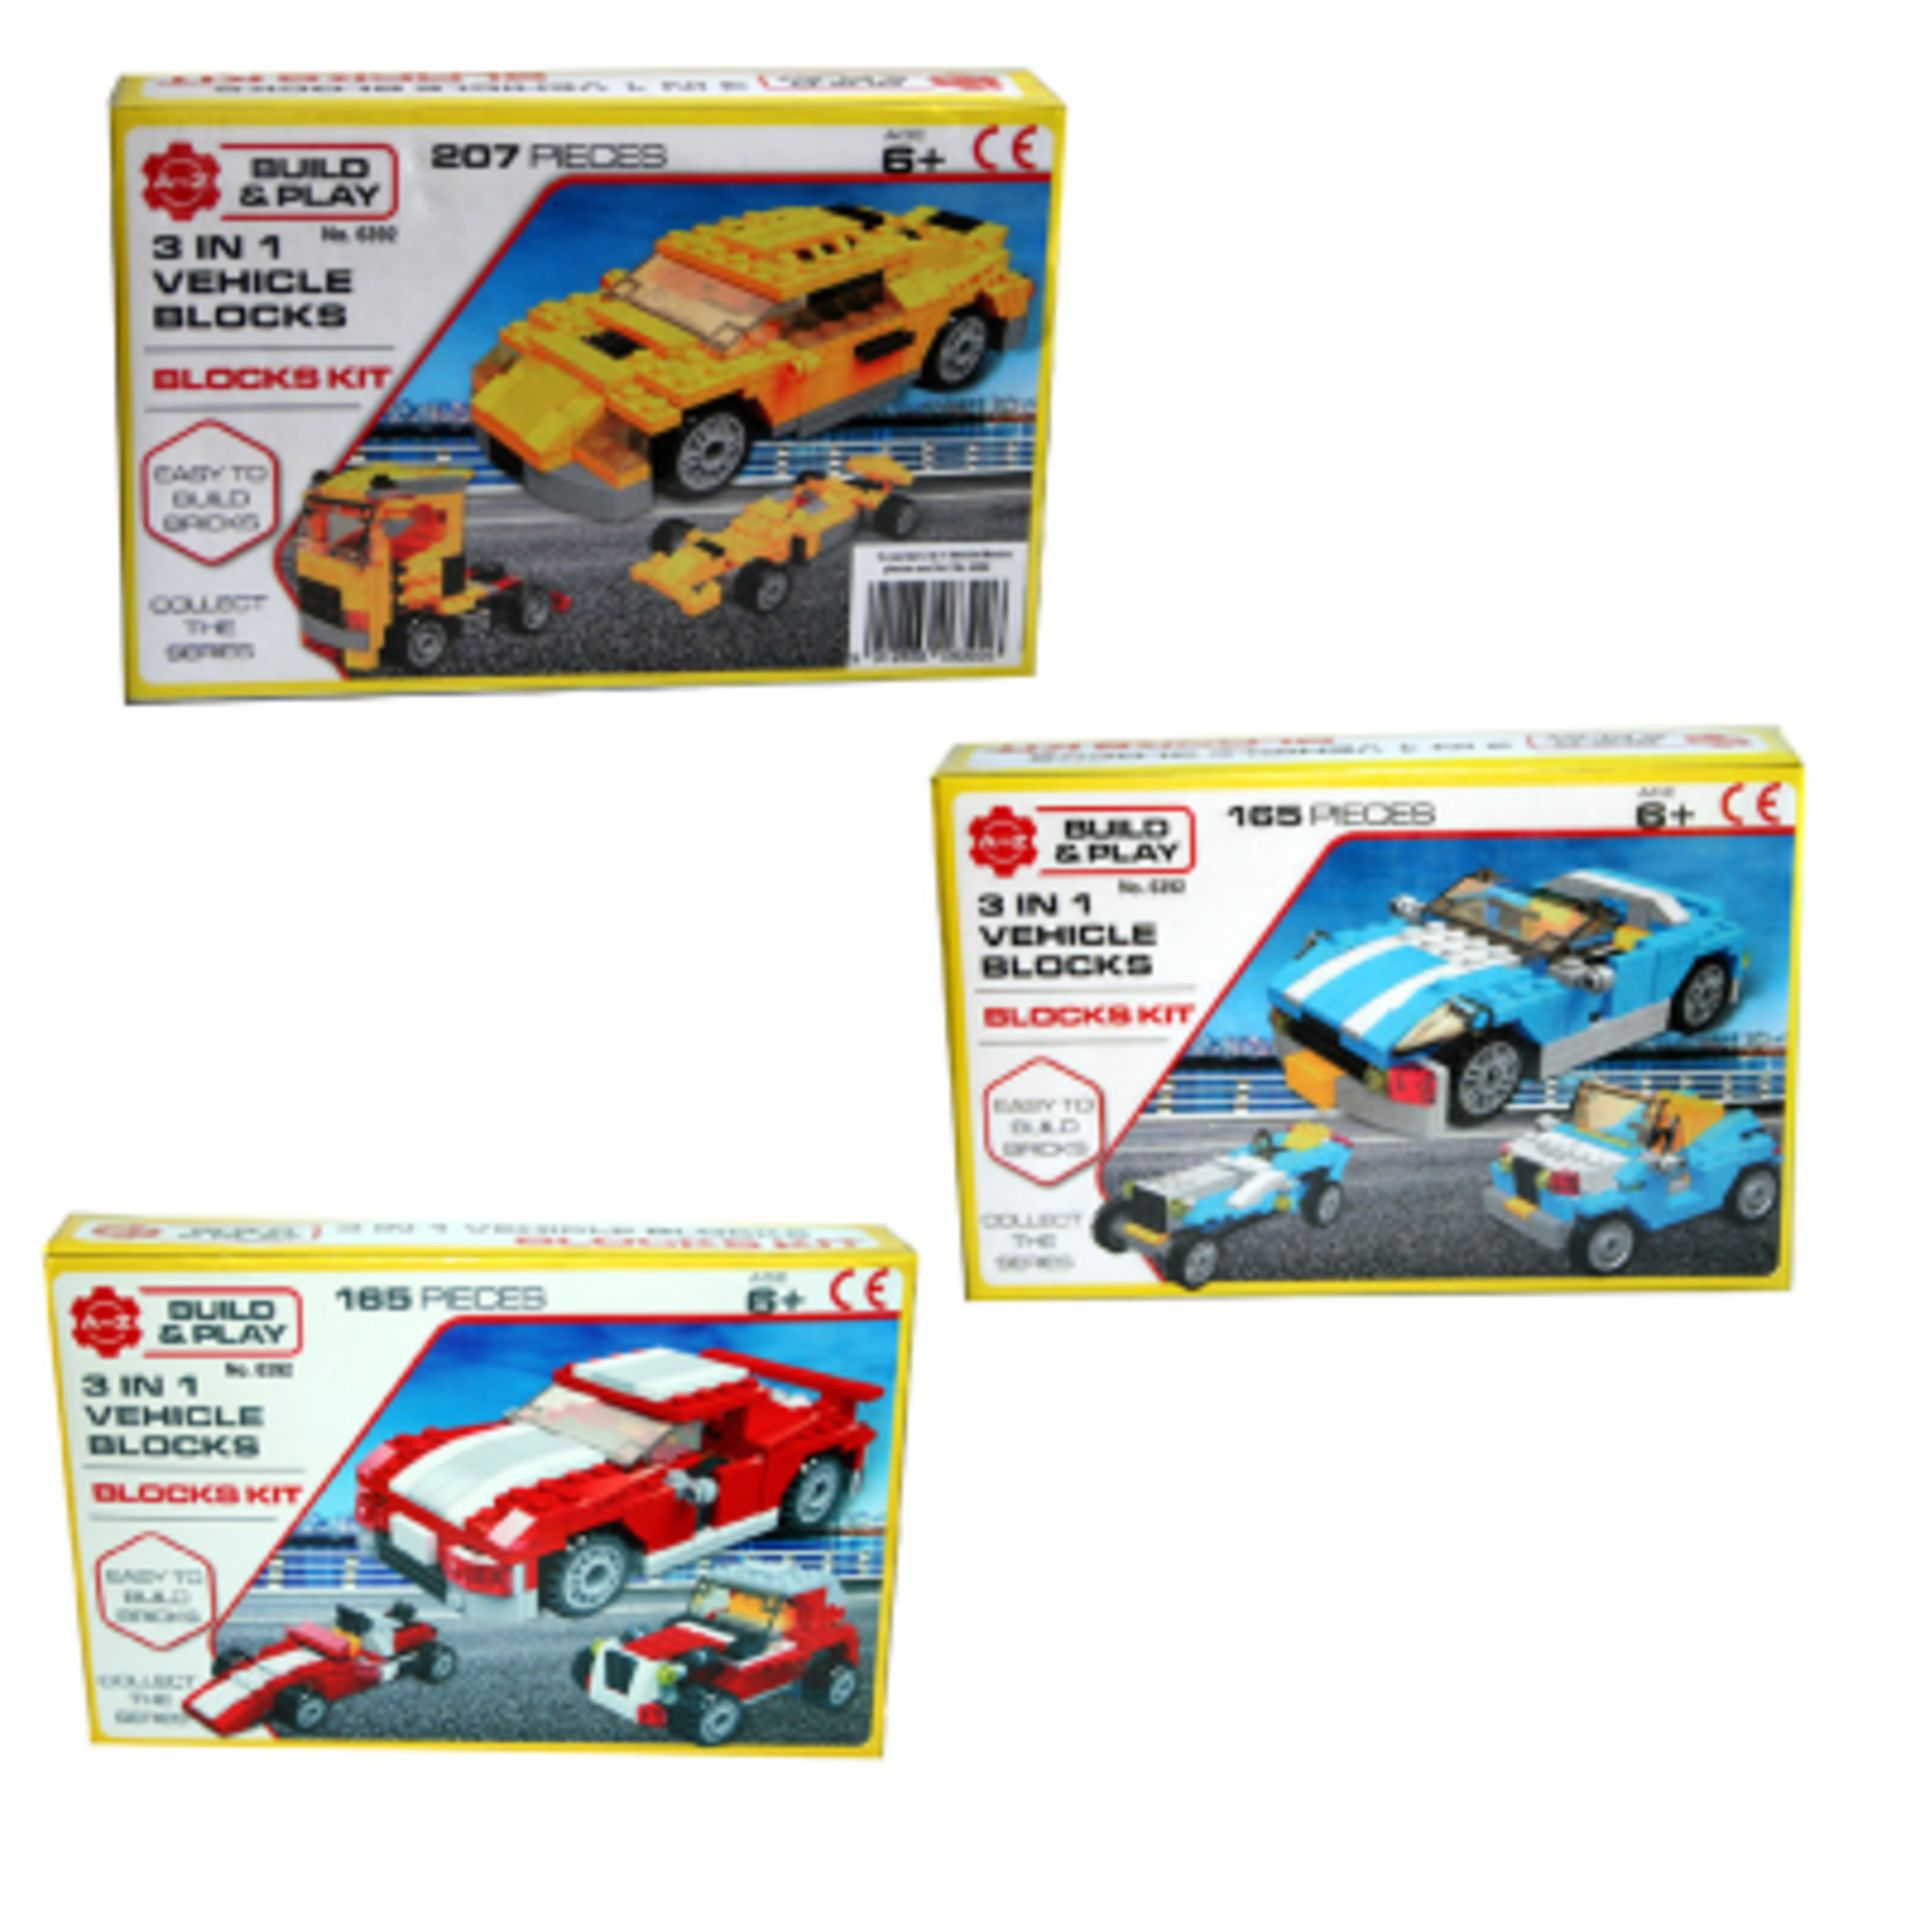 + VAT Brand New Three In One Vehicle Construction Block Kit - Lego Style